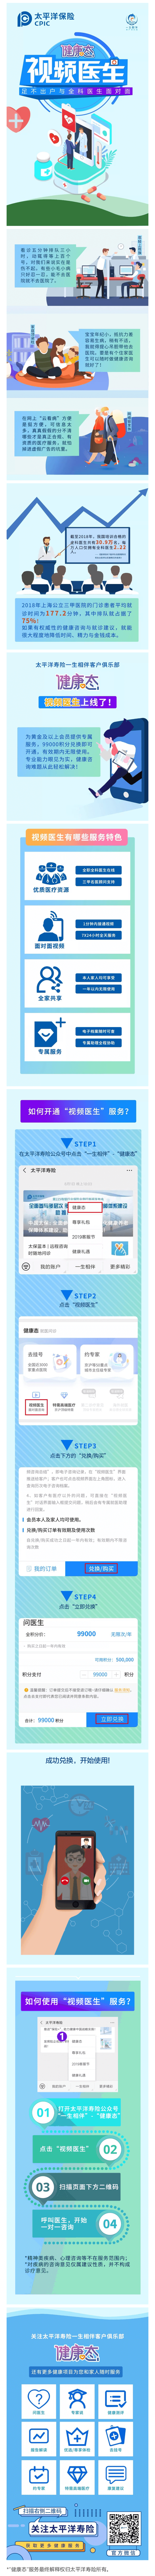 20200312_1506_yiban_screenshot.png